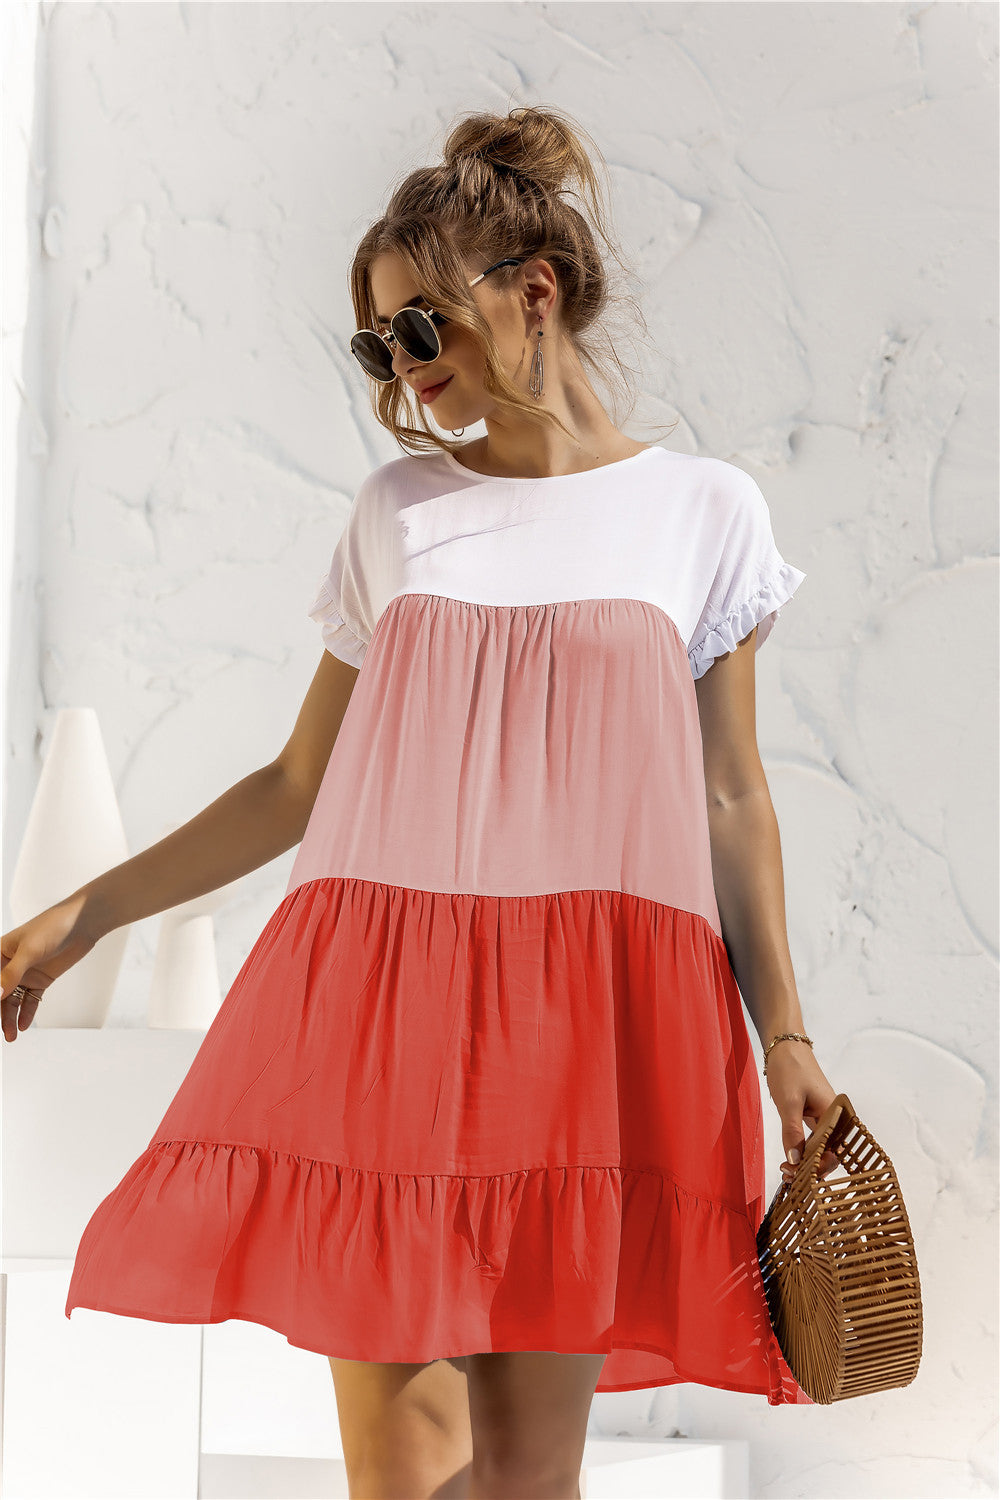 Summer Leisure Ruffled Daily Short Dresses-Mini Dresses-Orange-S-Free Shipping at meselling99